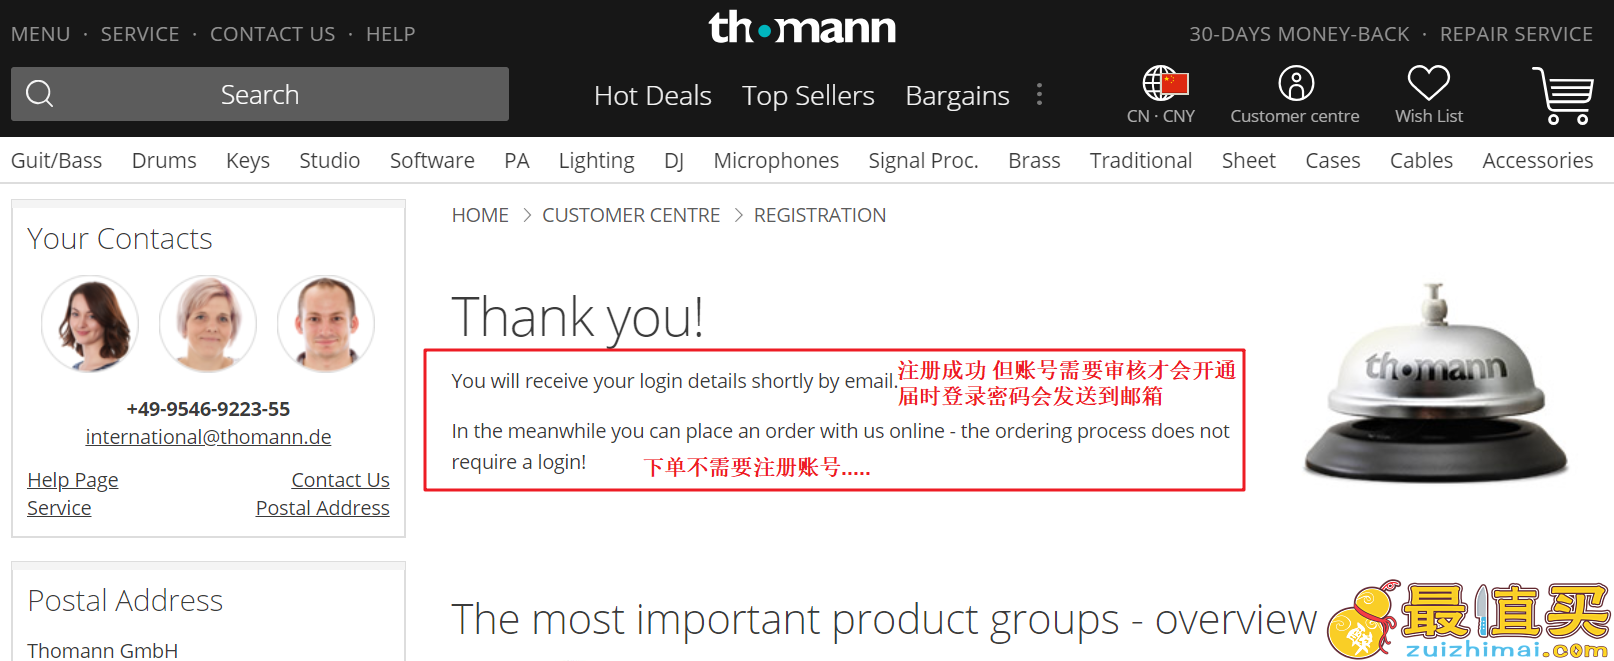 thomann官网-欧洲最大的乐器电商thomann 支持直邮中国 海淘真力音箱 吉他 琴-图片3